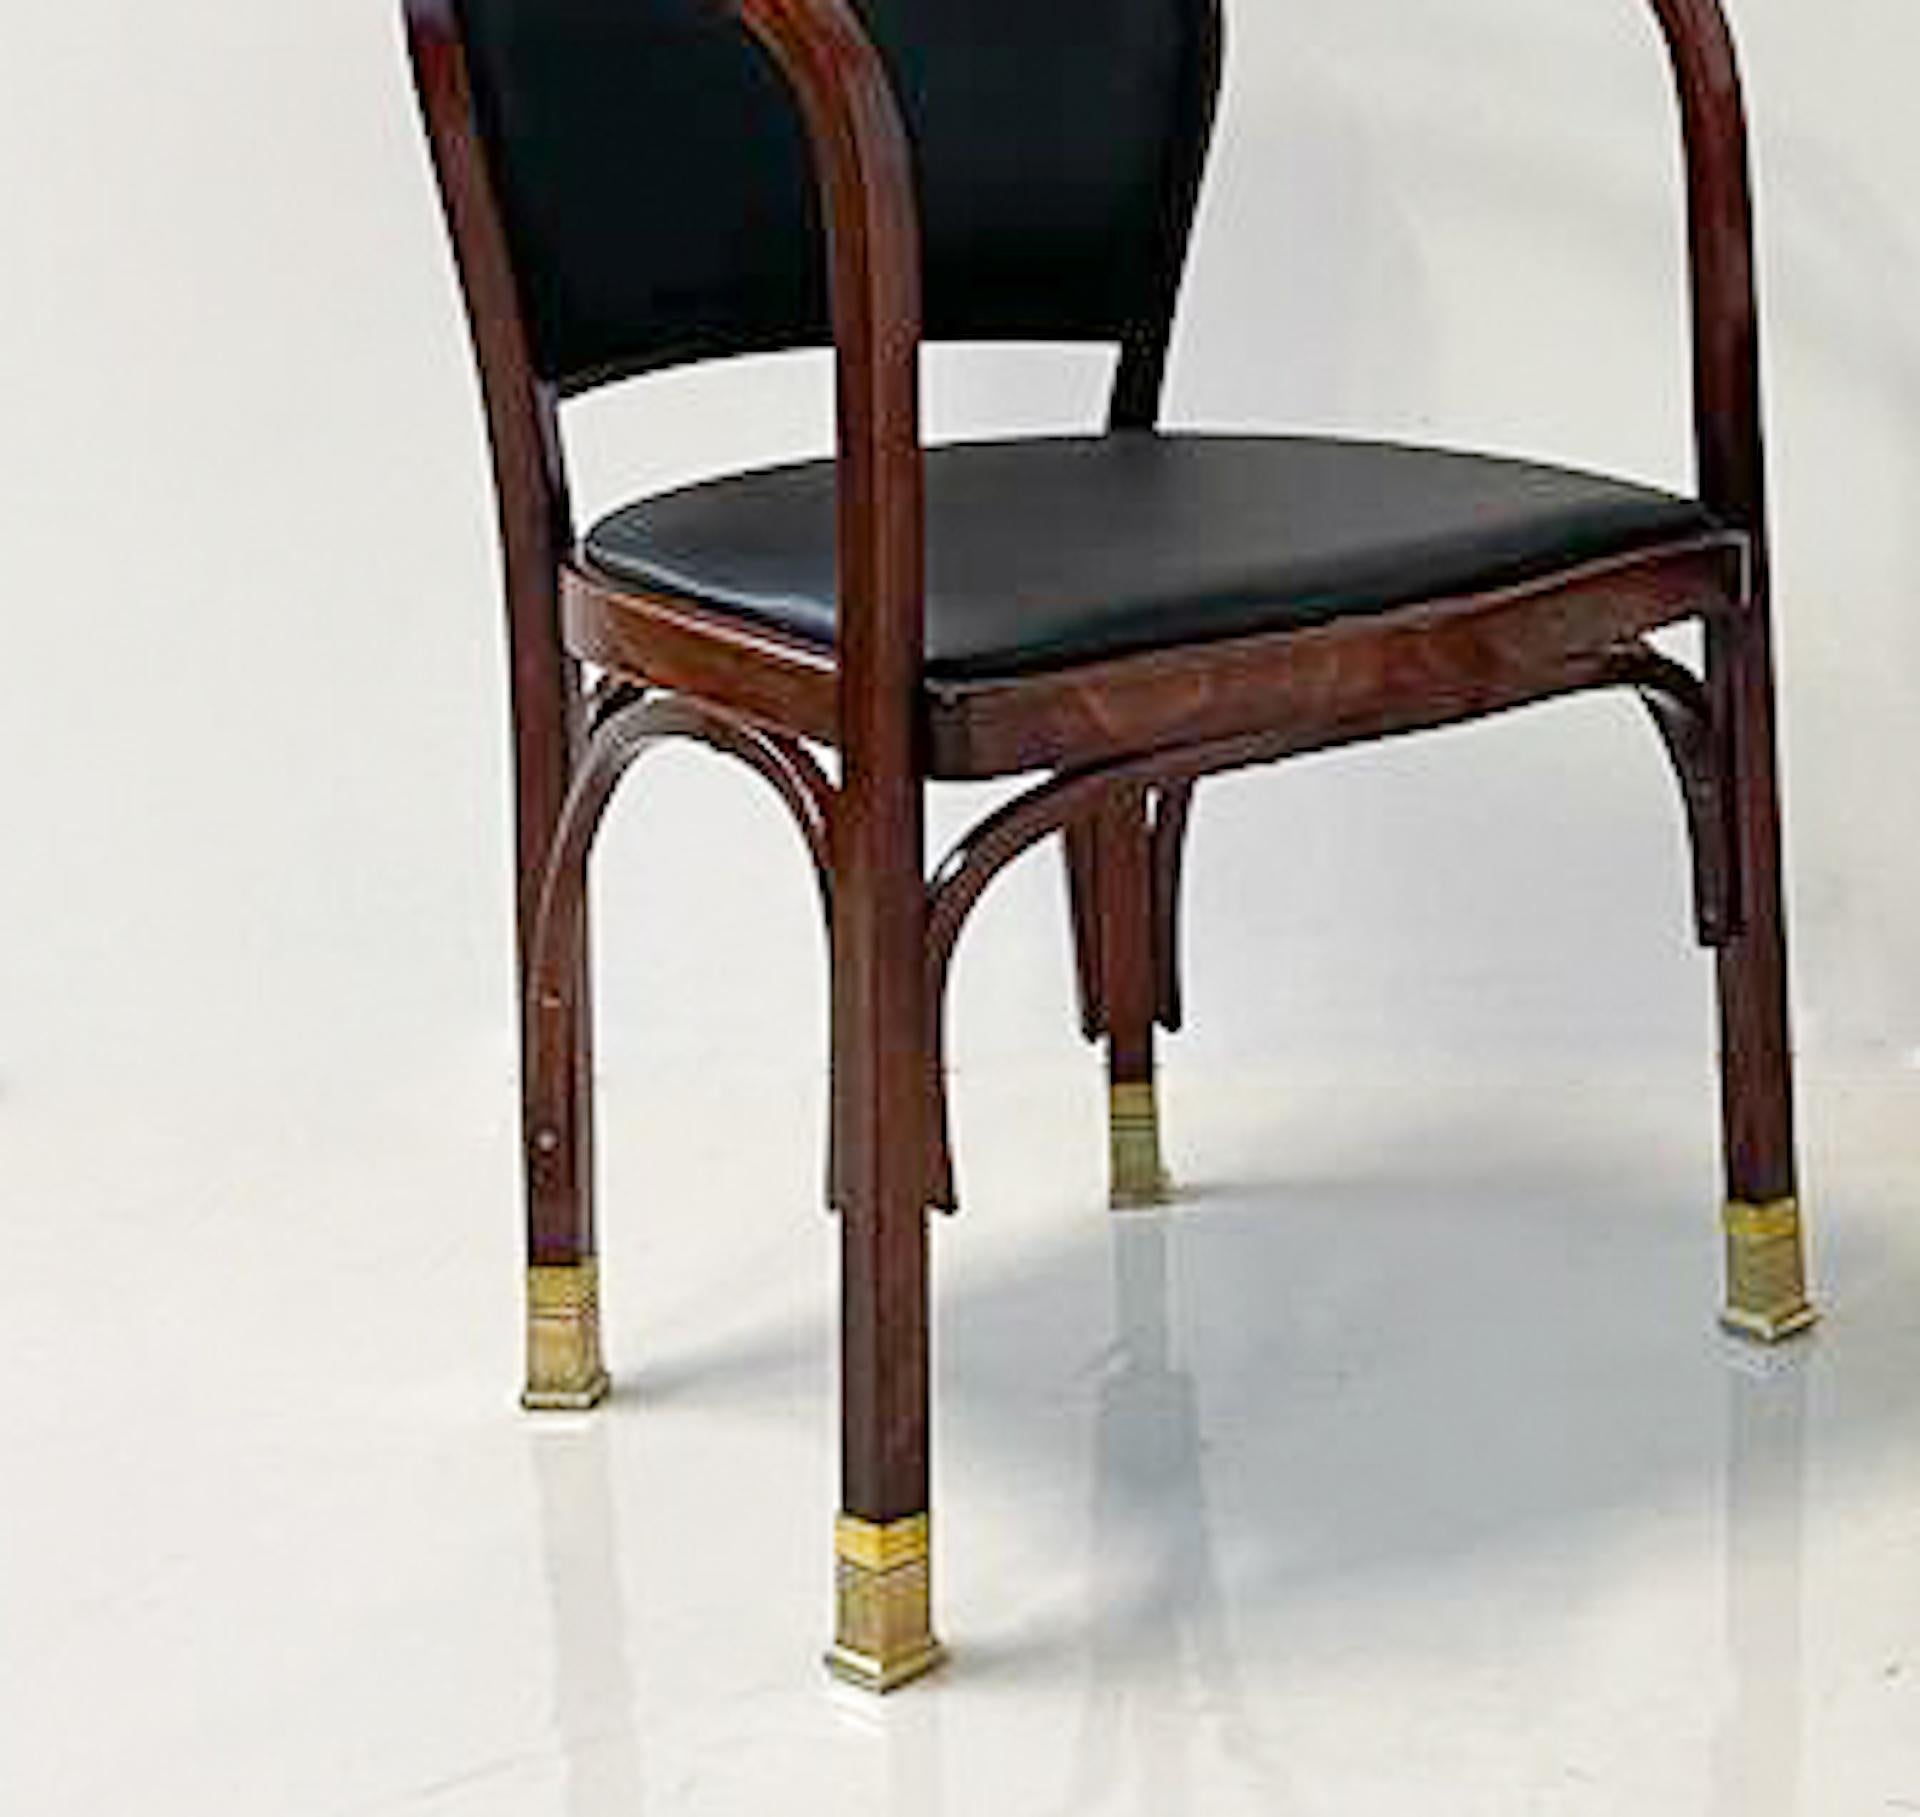 Pair of N° 715 Gustav Siegel Armchairs for Kohn, Austria, 1900s
Wood and Leather 